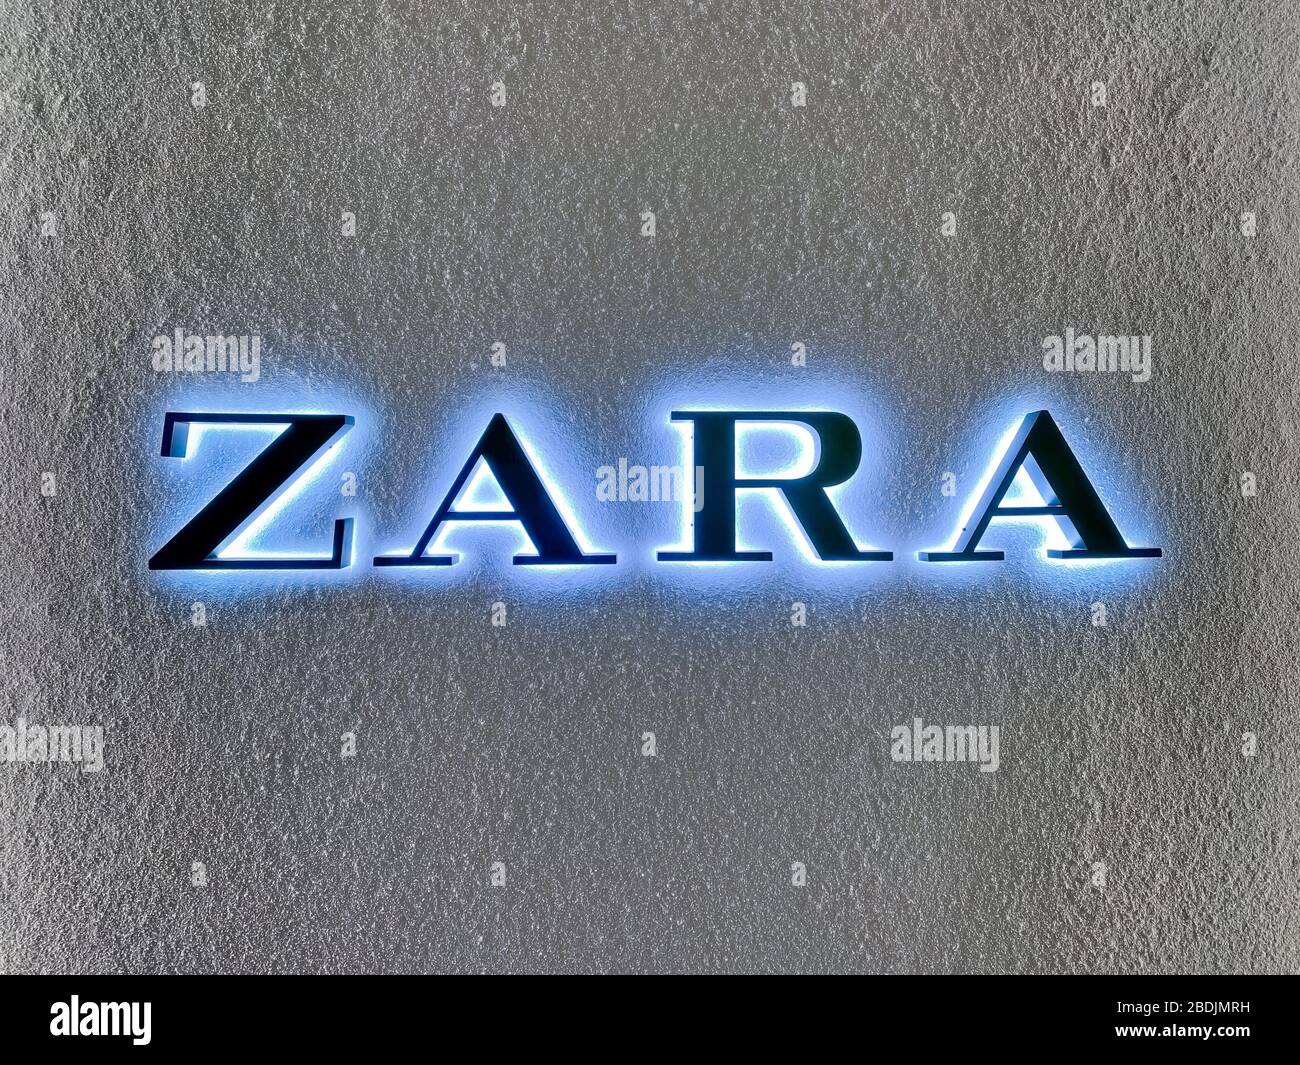 where is zara located